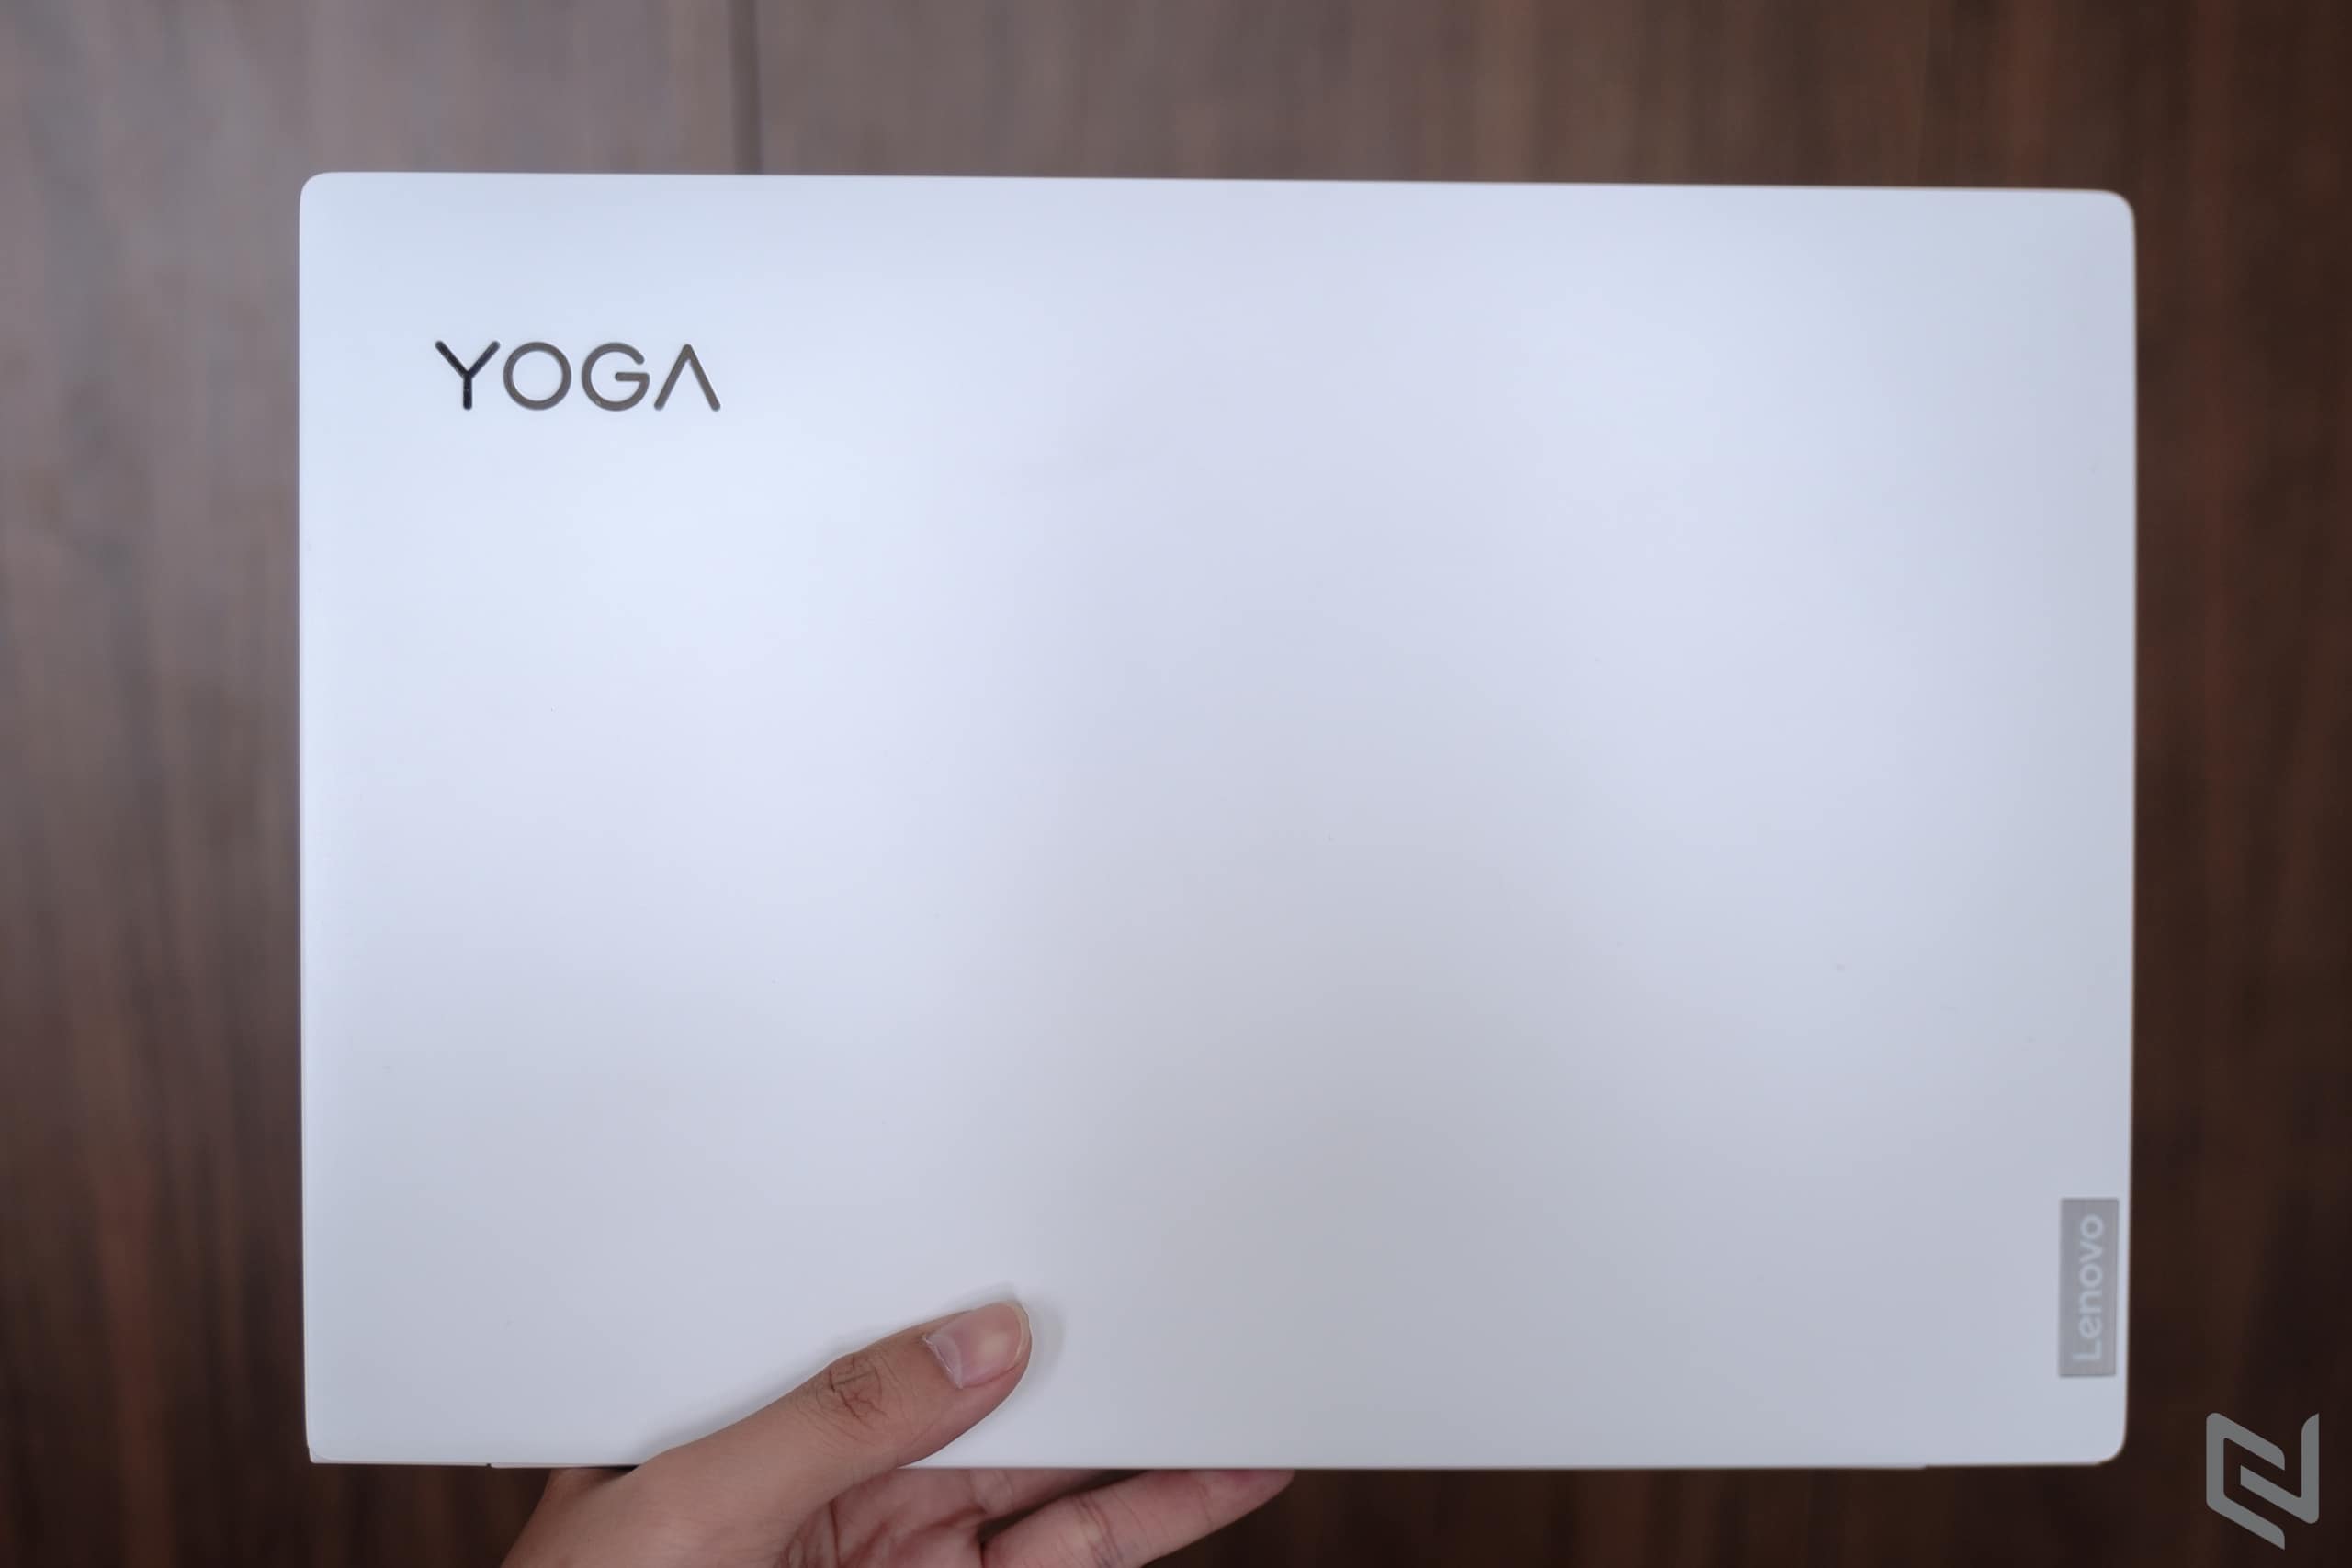 Lenovo Yoga Slim 7i Carbon